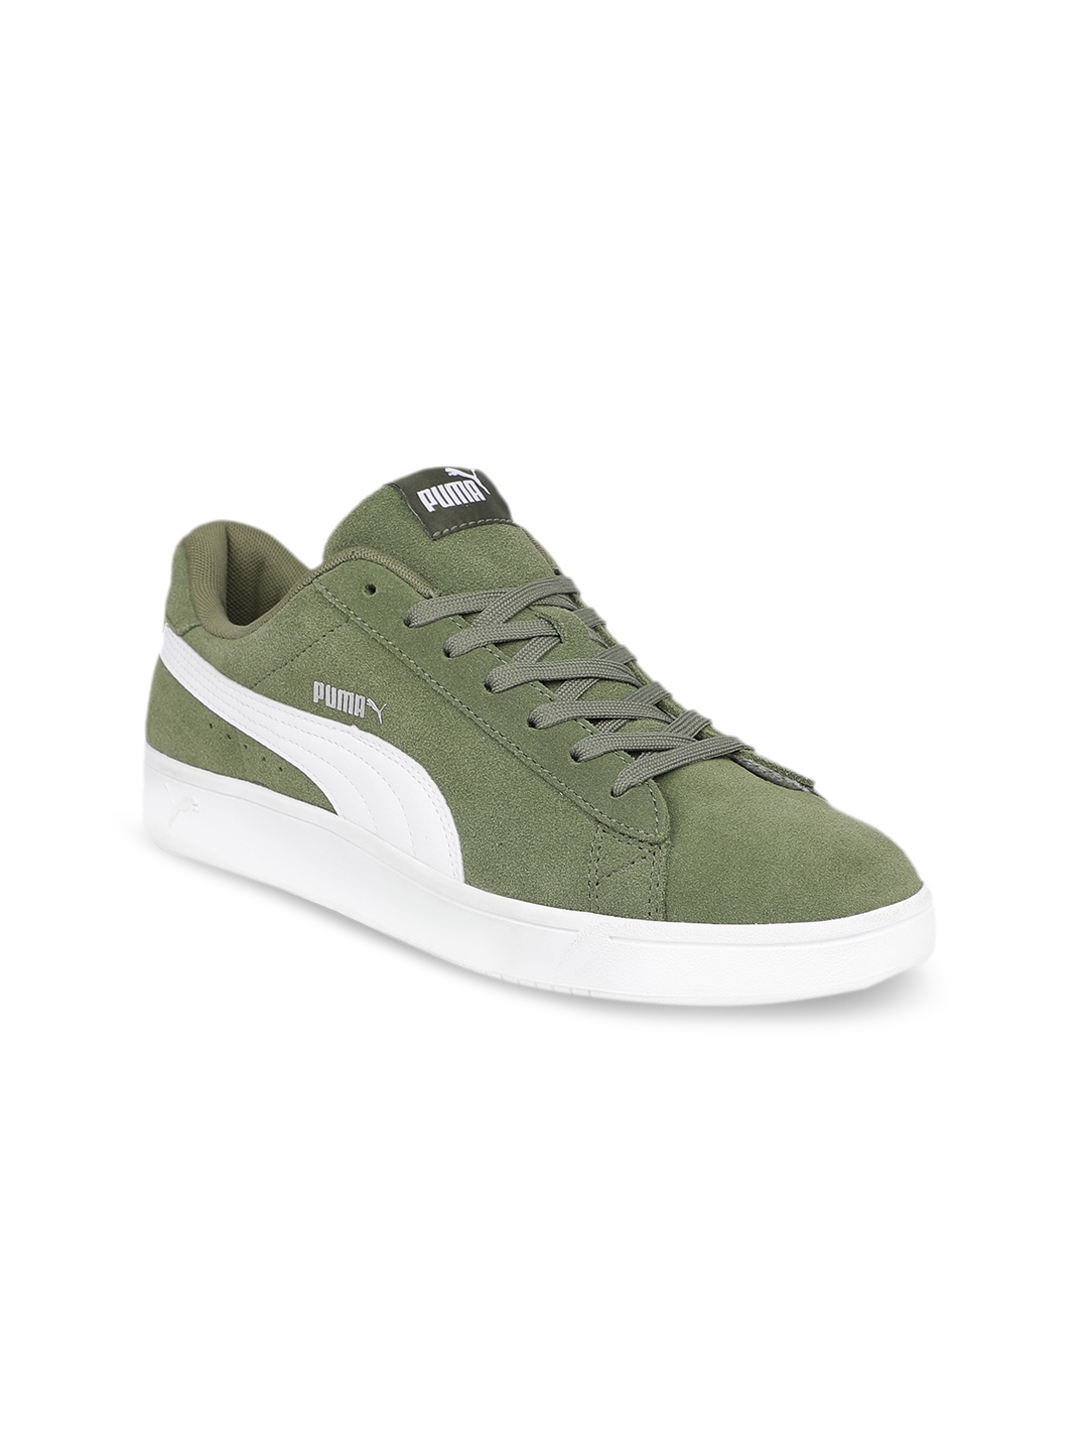 Buy Puma Men Olive Green Sneakers 